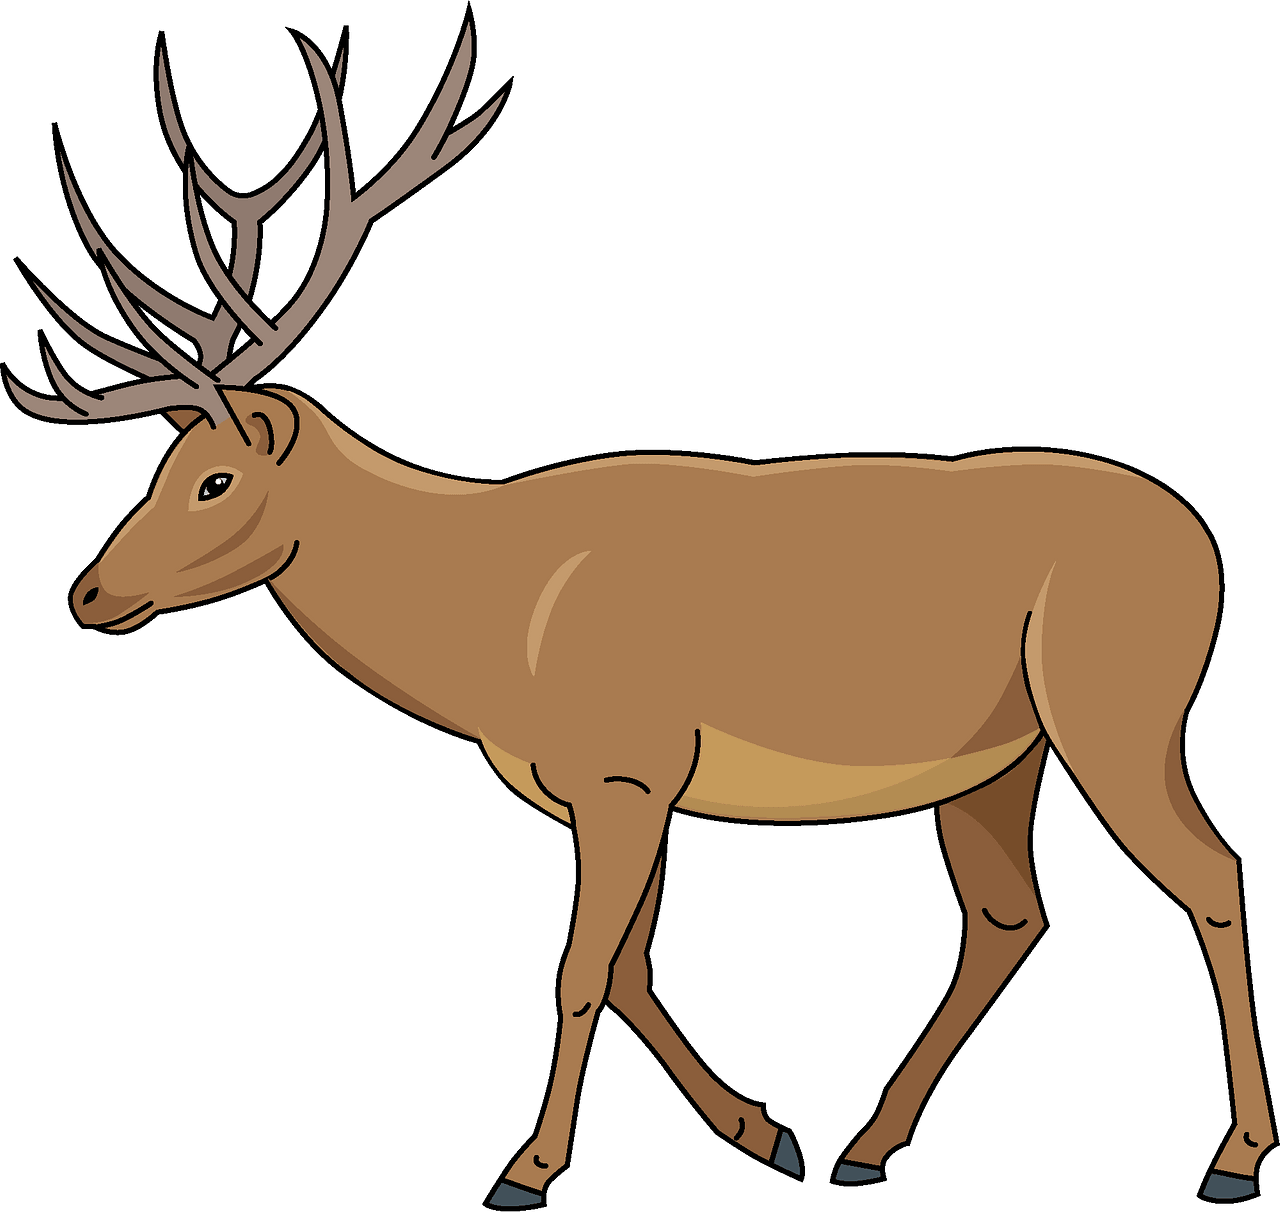 Free Deer Clipart, Download Free Deer Clipart png images